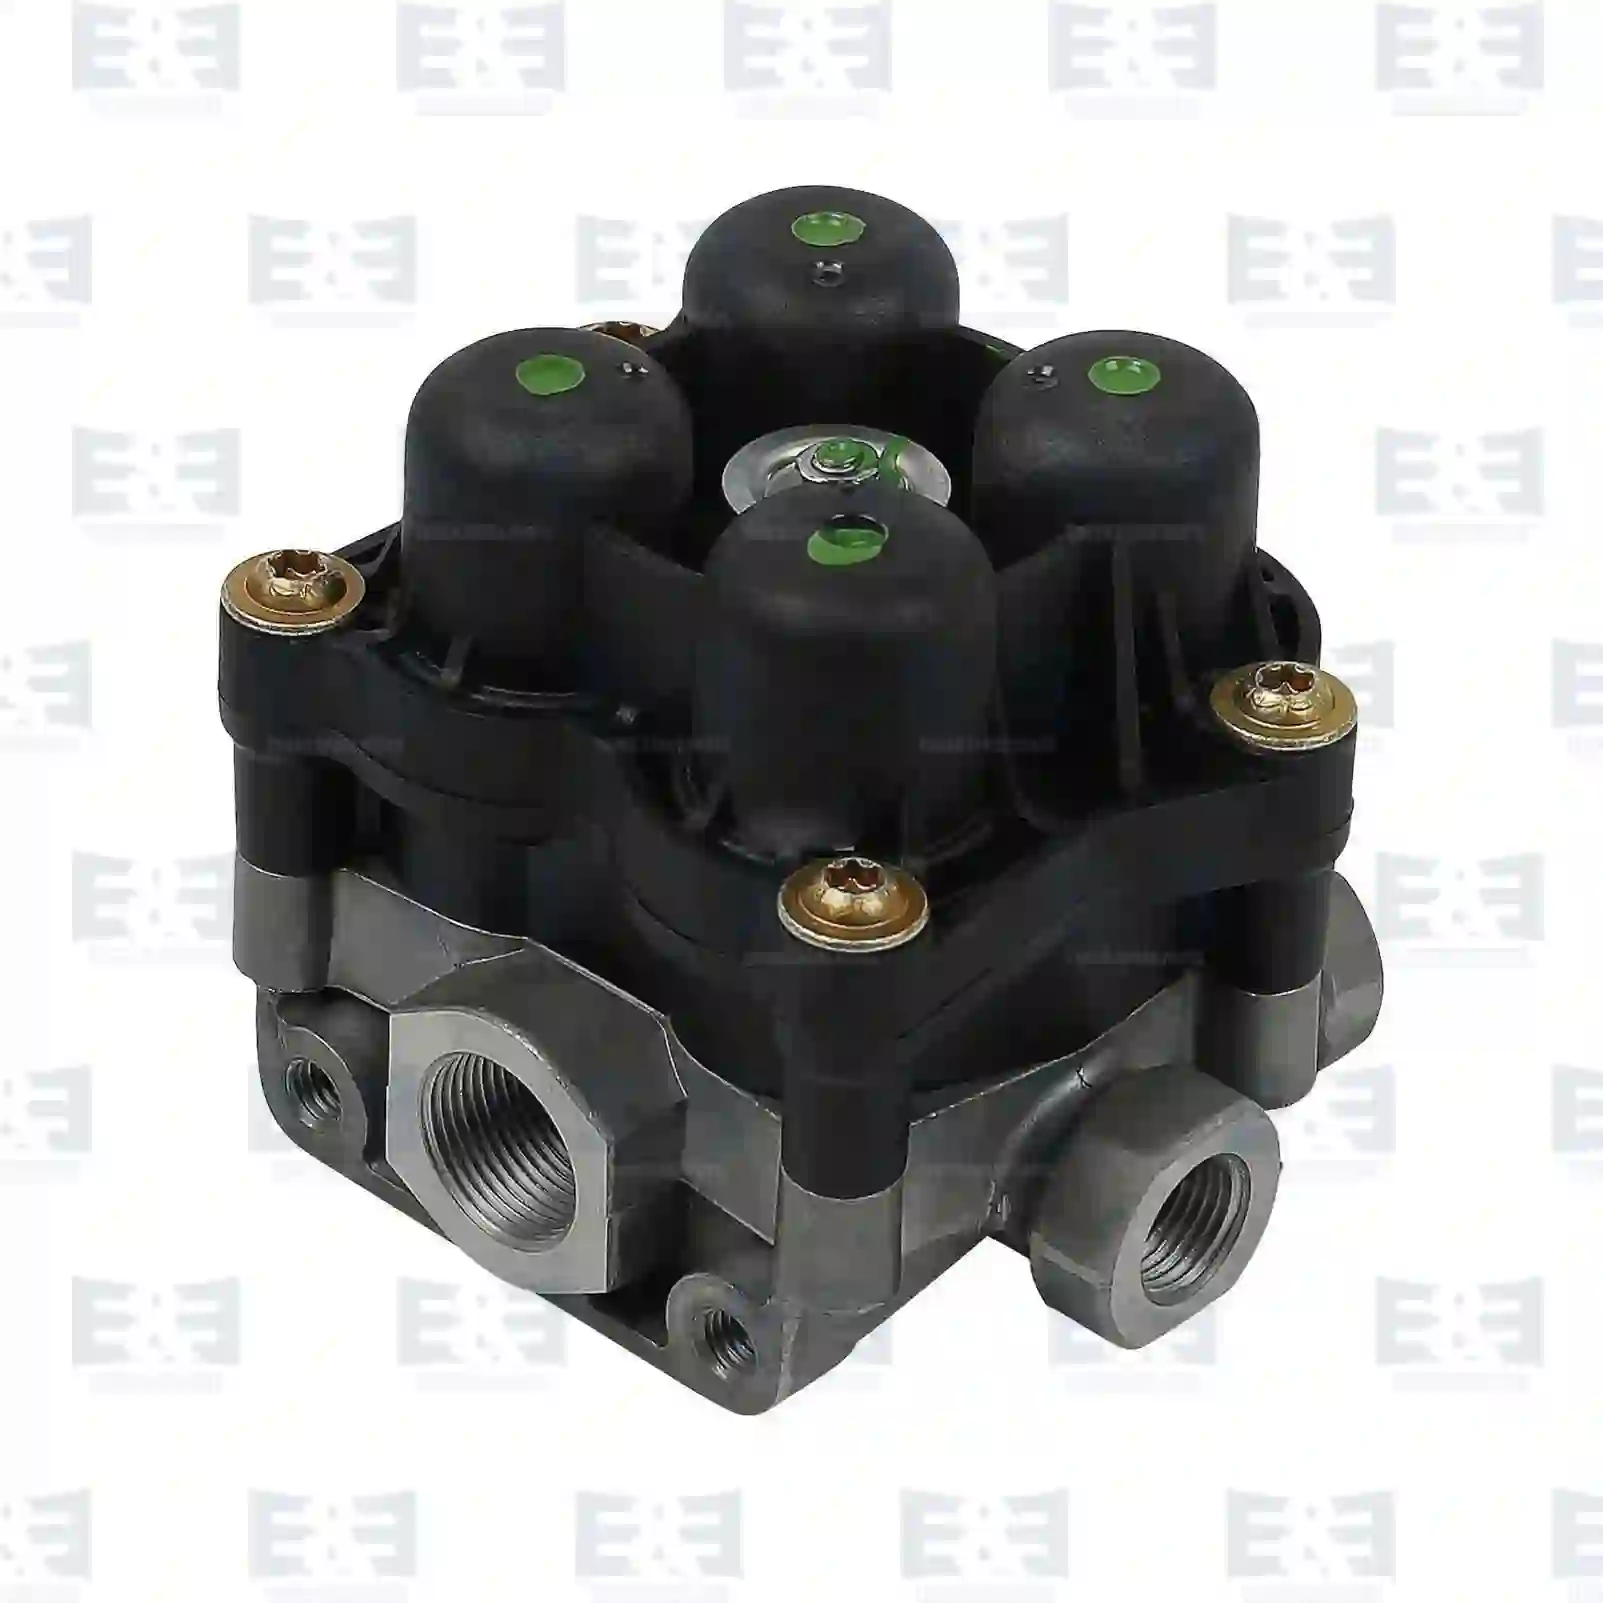  4-circuit-protection valve || E&E Truck Spare Parts | Truck Spare Parts, Auotomotive Spare Parts